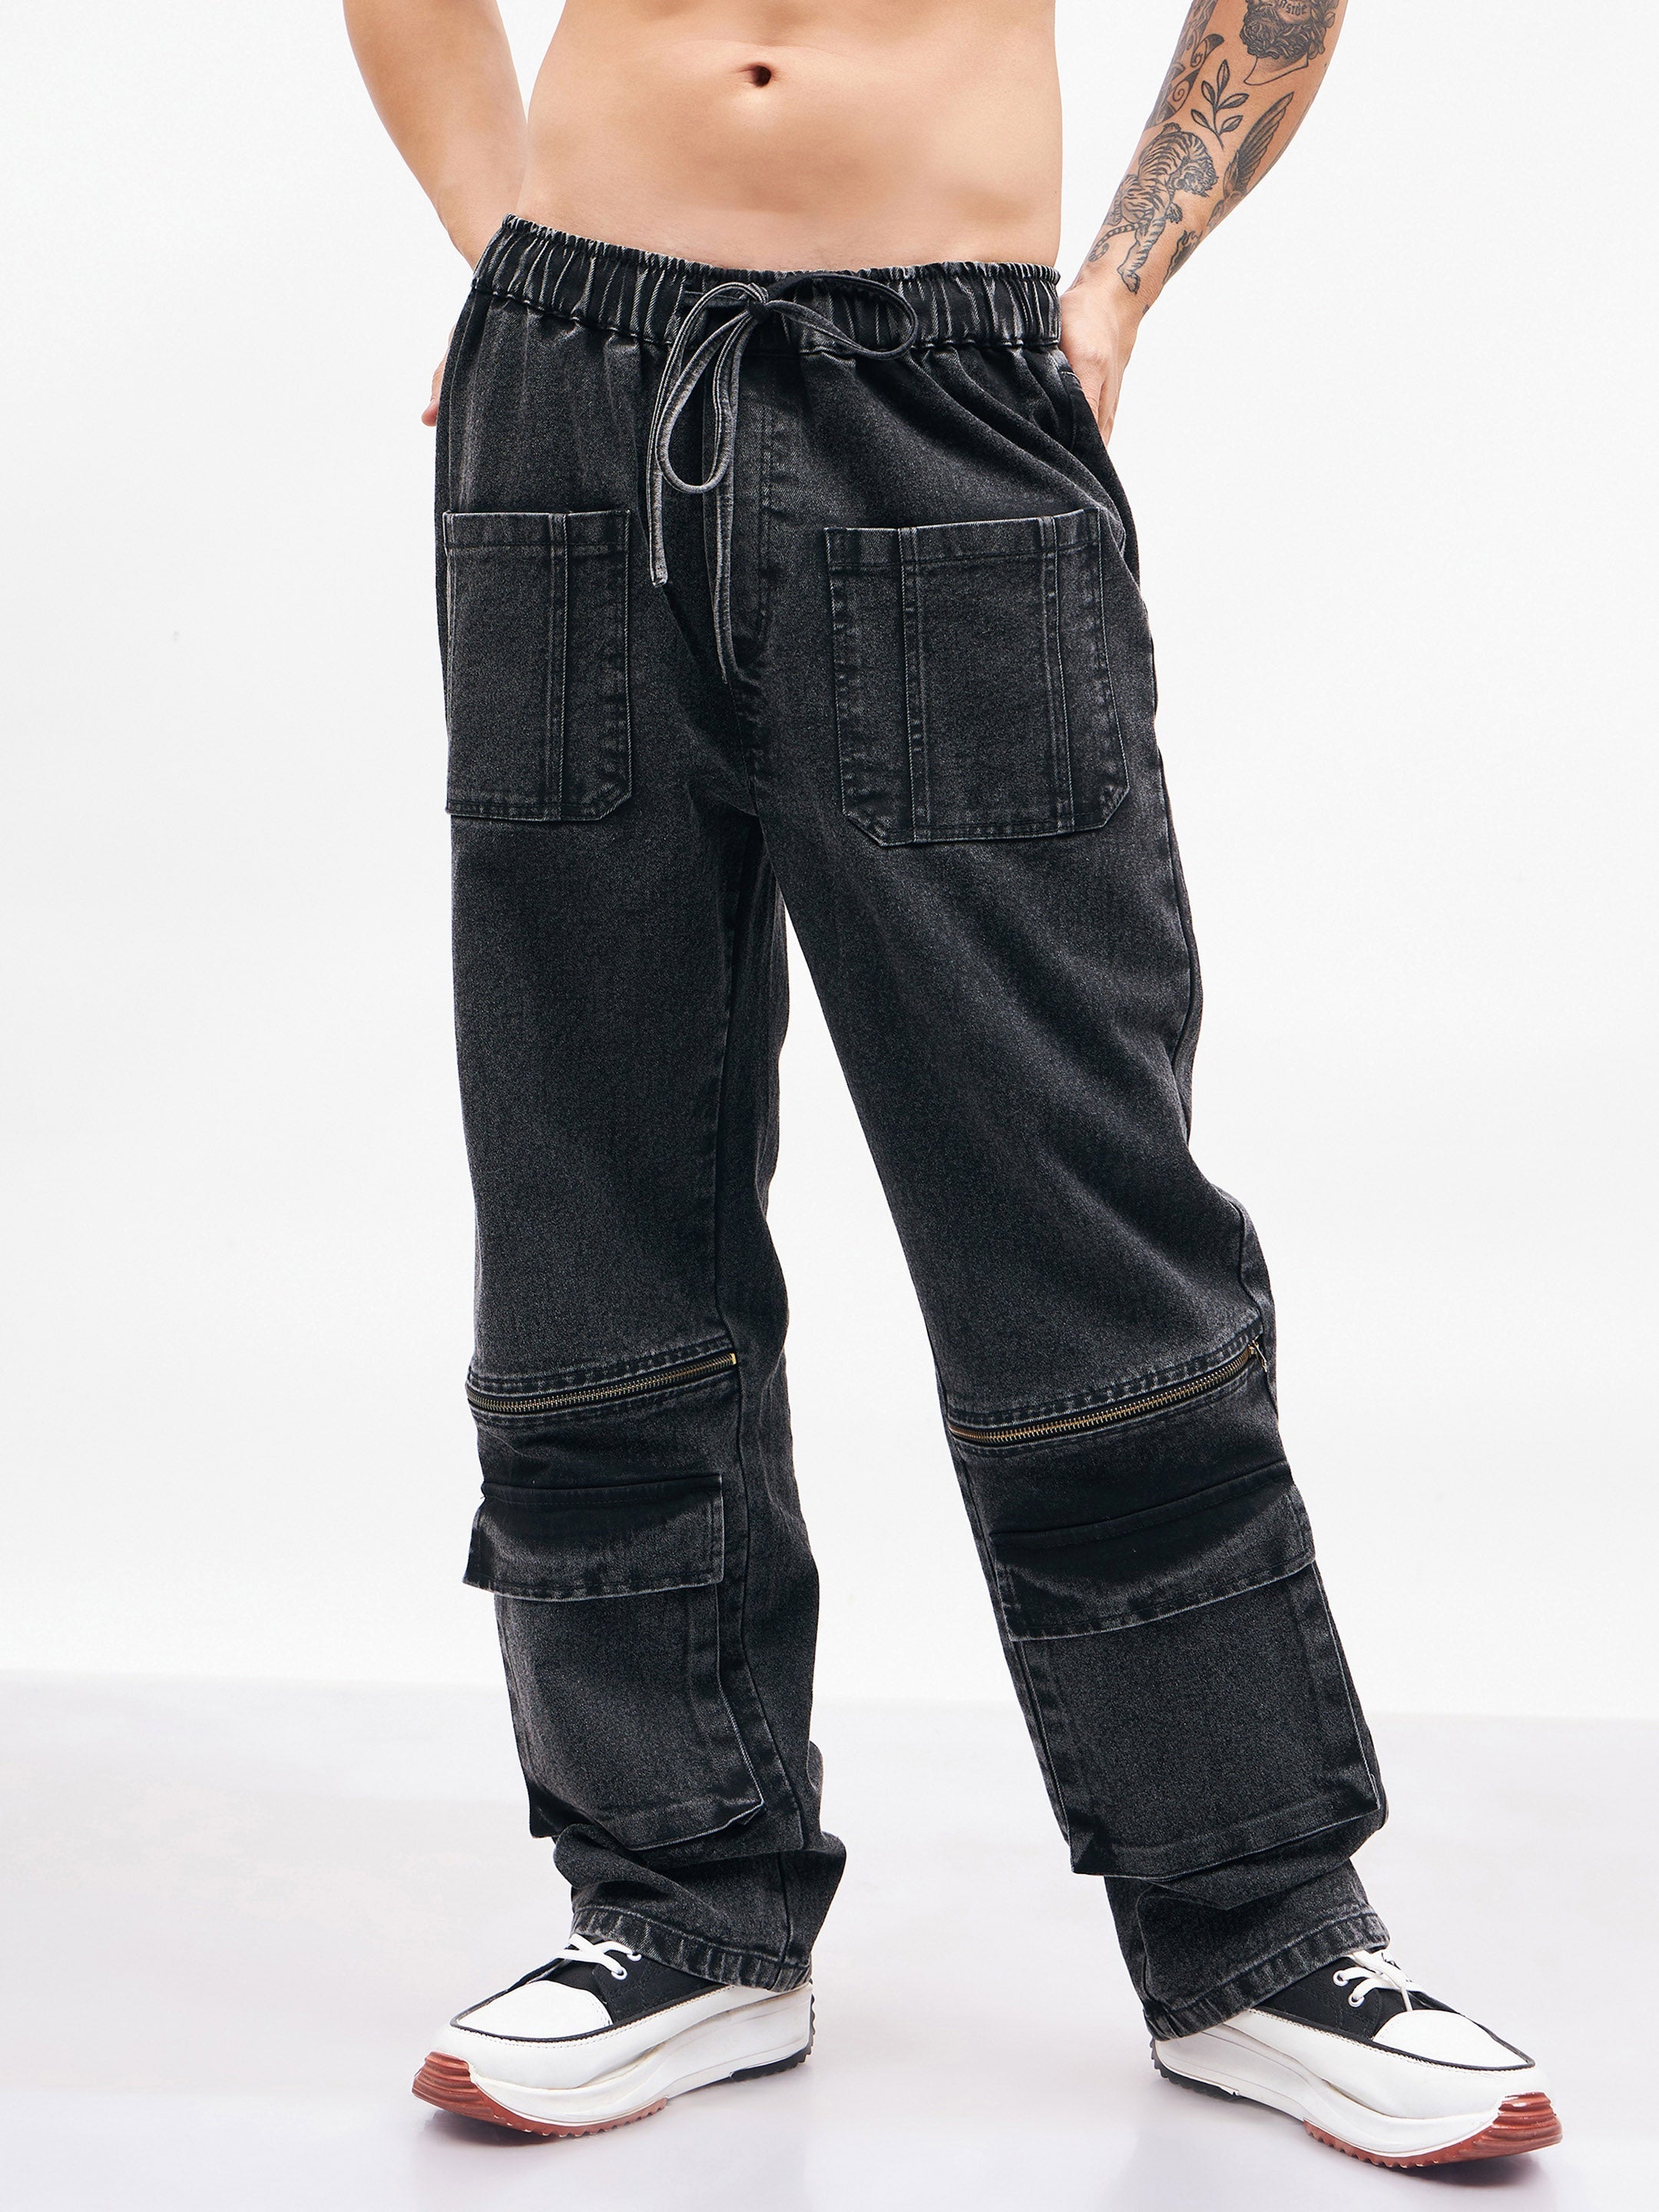 Men's Black Front Zipper Baggy Fit Jeans - MASCLN SASSAFRAS